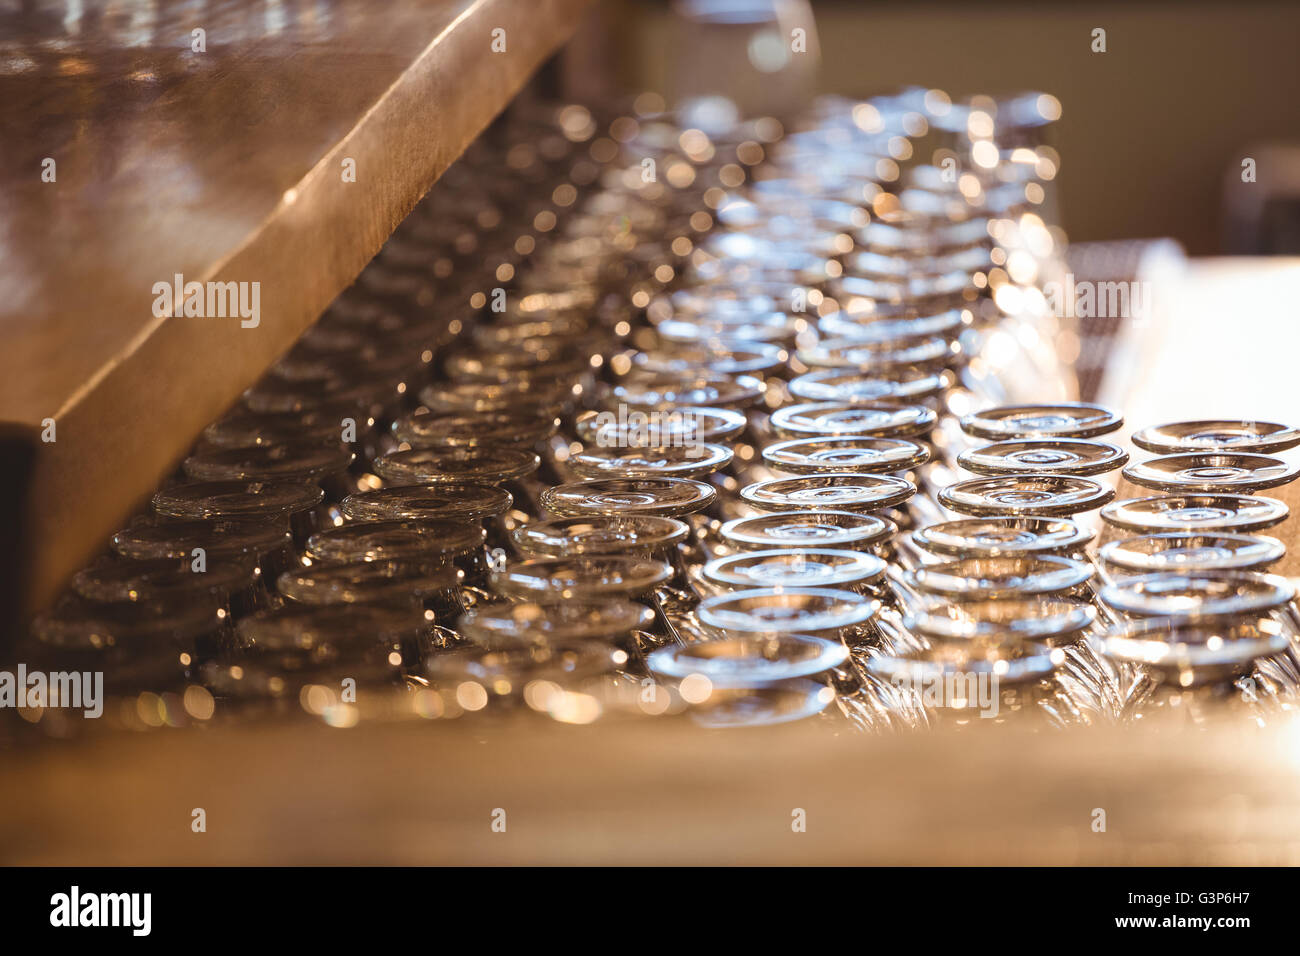 Empty wine glasses arranged on bar counter Stock Photo